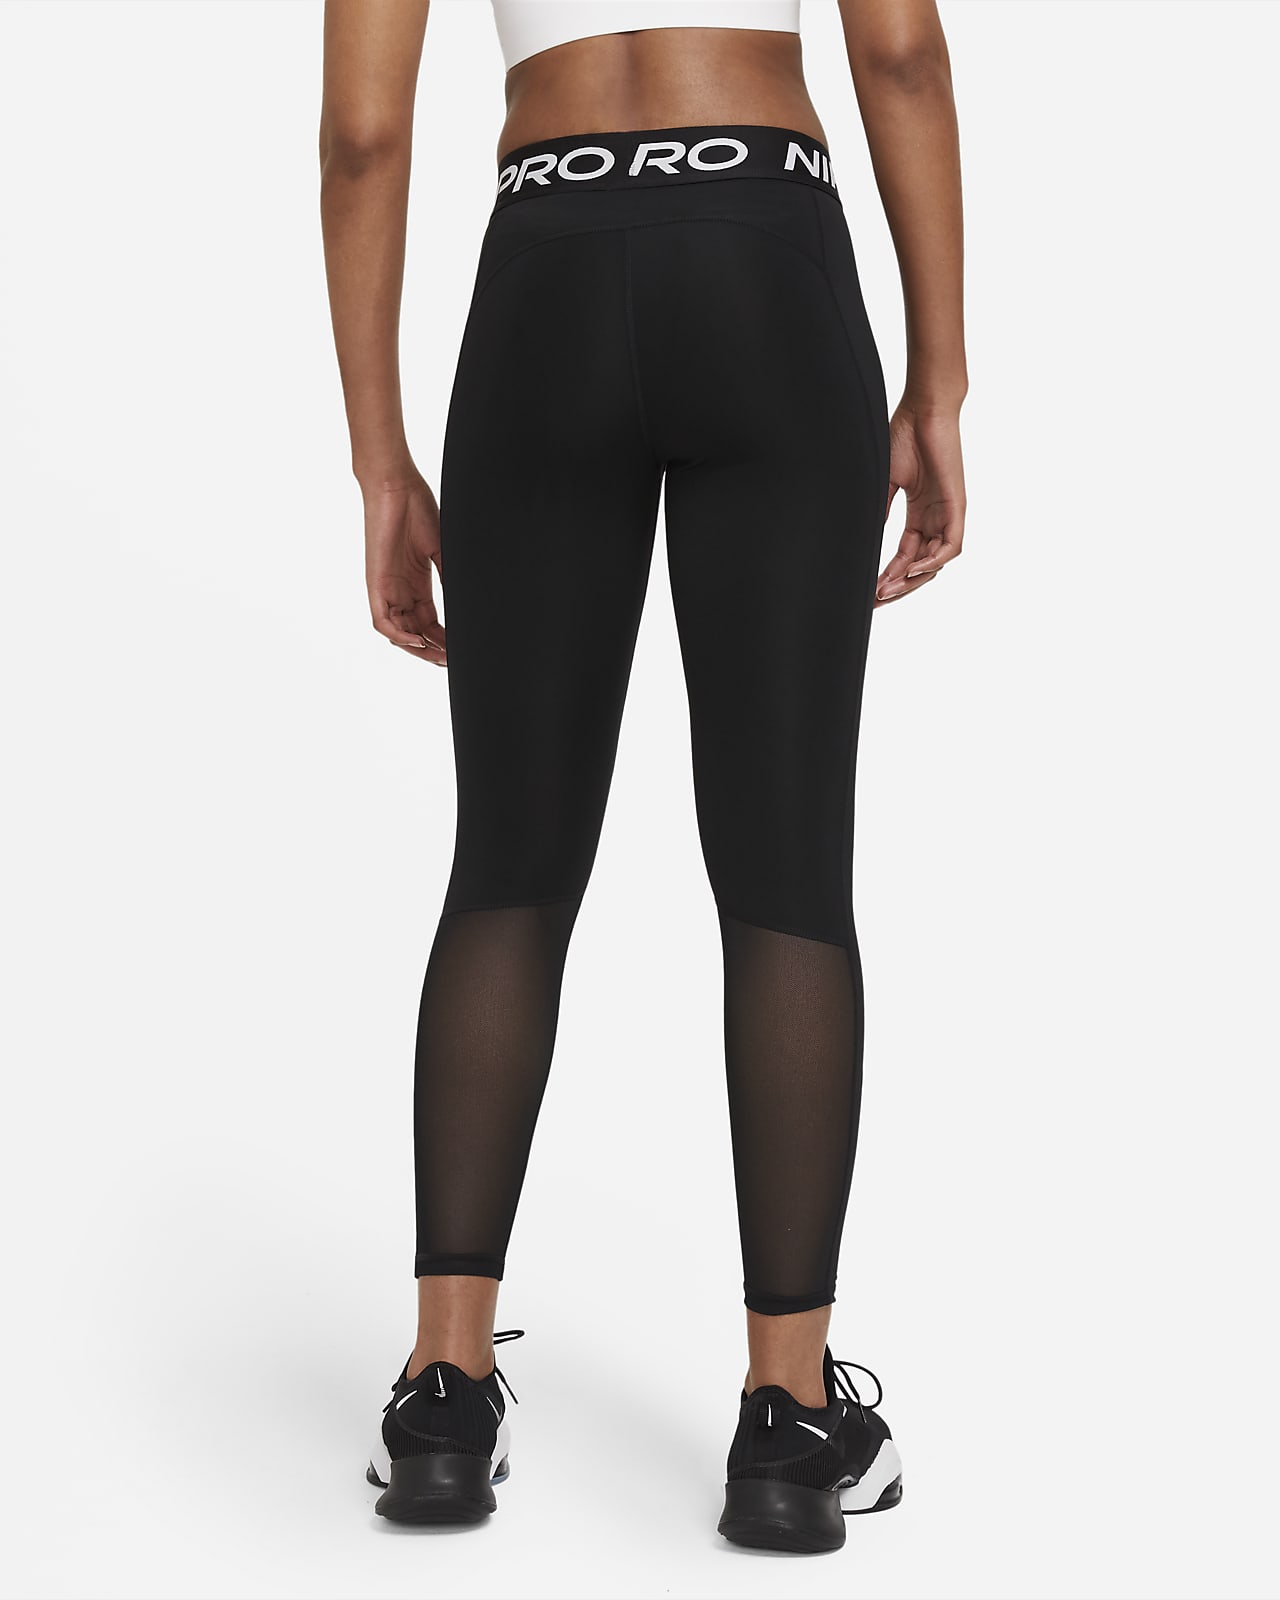 One cropped sports leggings in floral print, black/grey, Nike | La Redoute